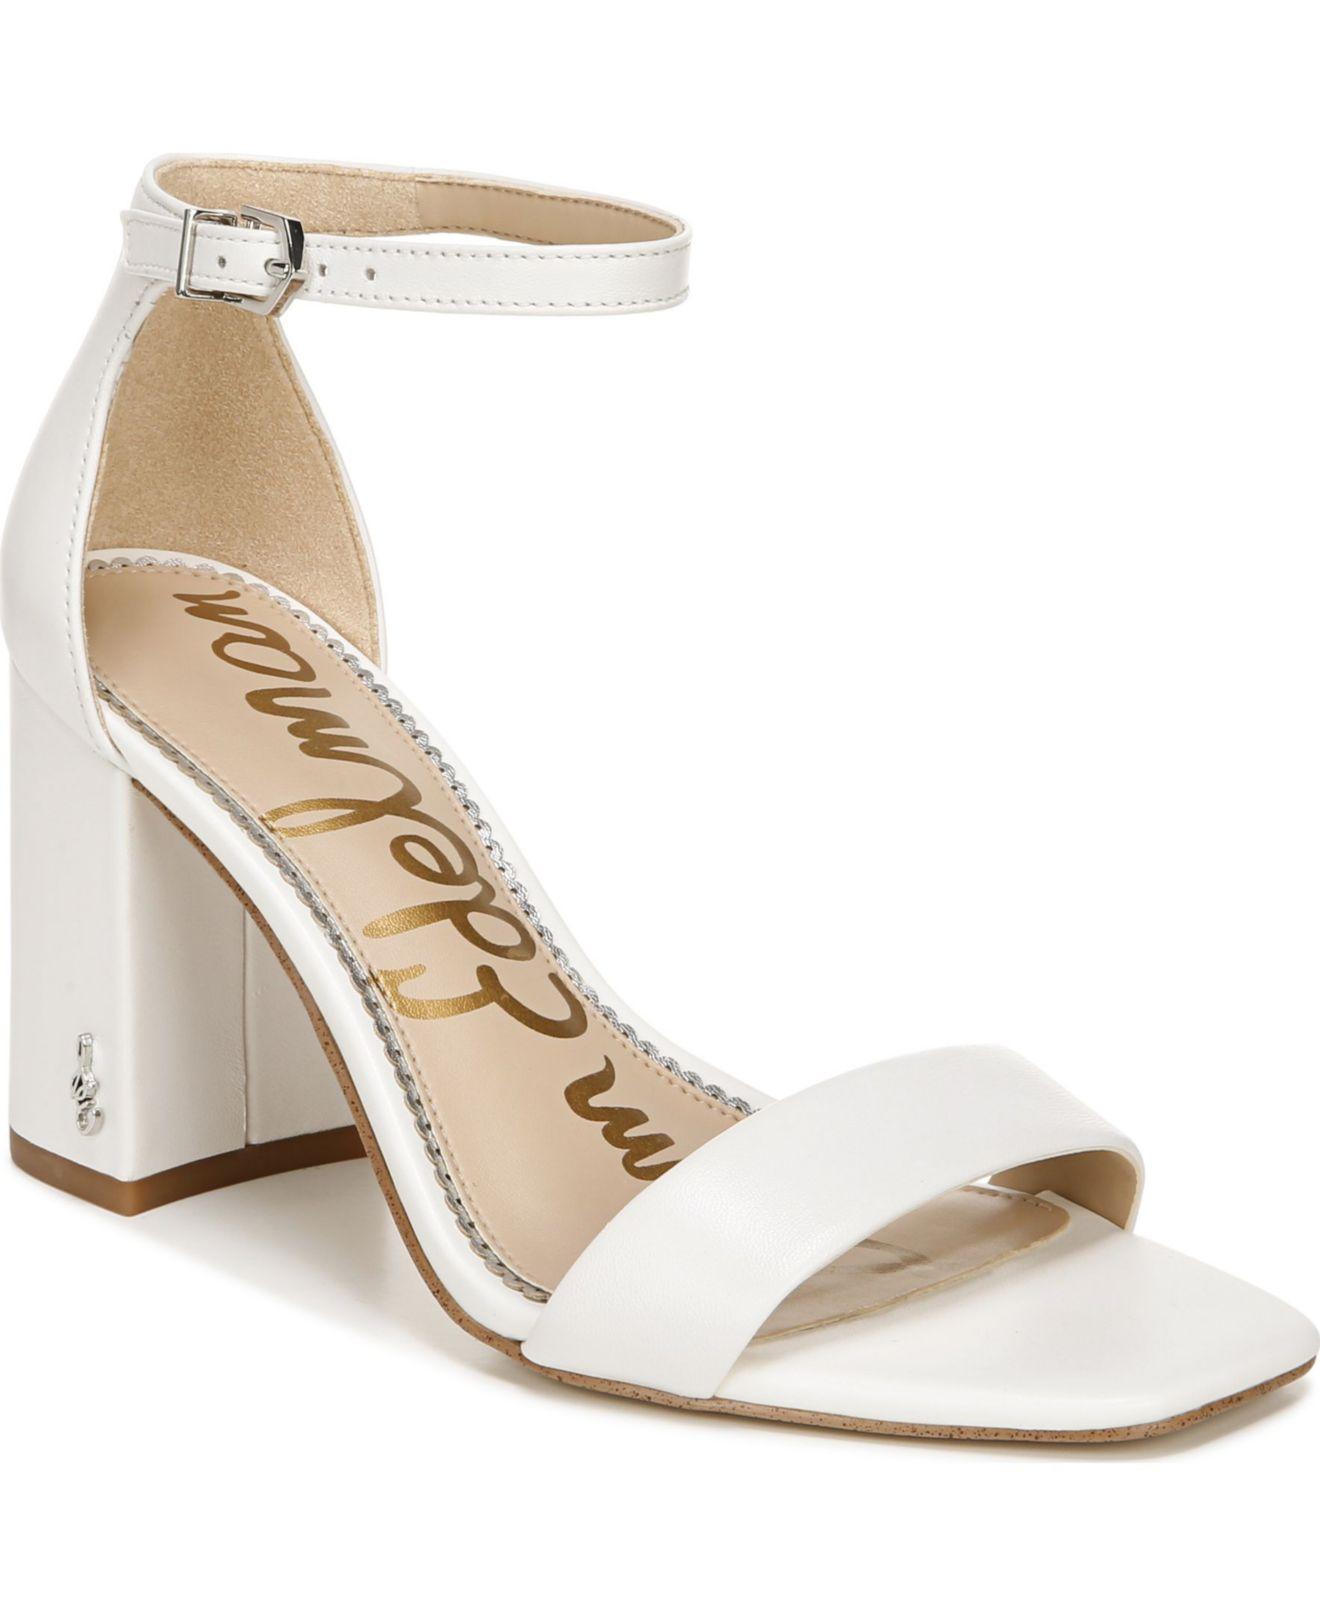 Sam Edelman Fur Daniella Dress Sandals in White Leather (White) - Lyst